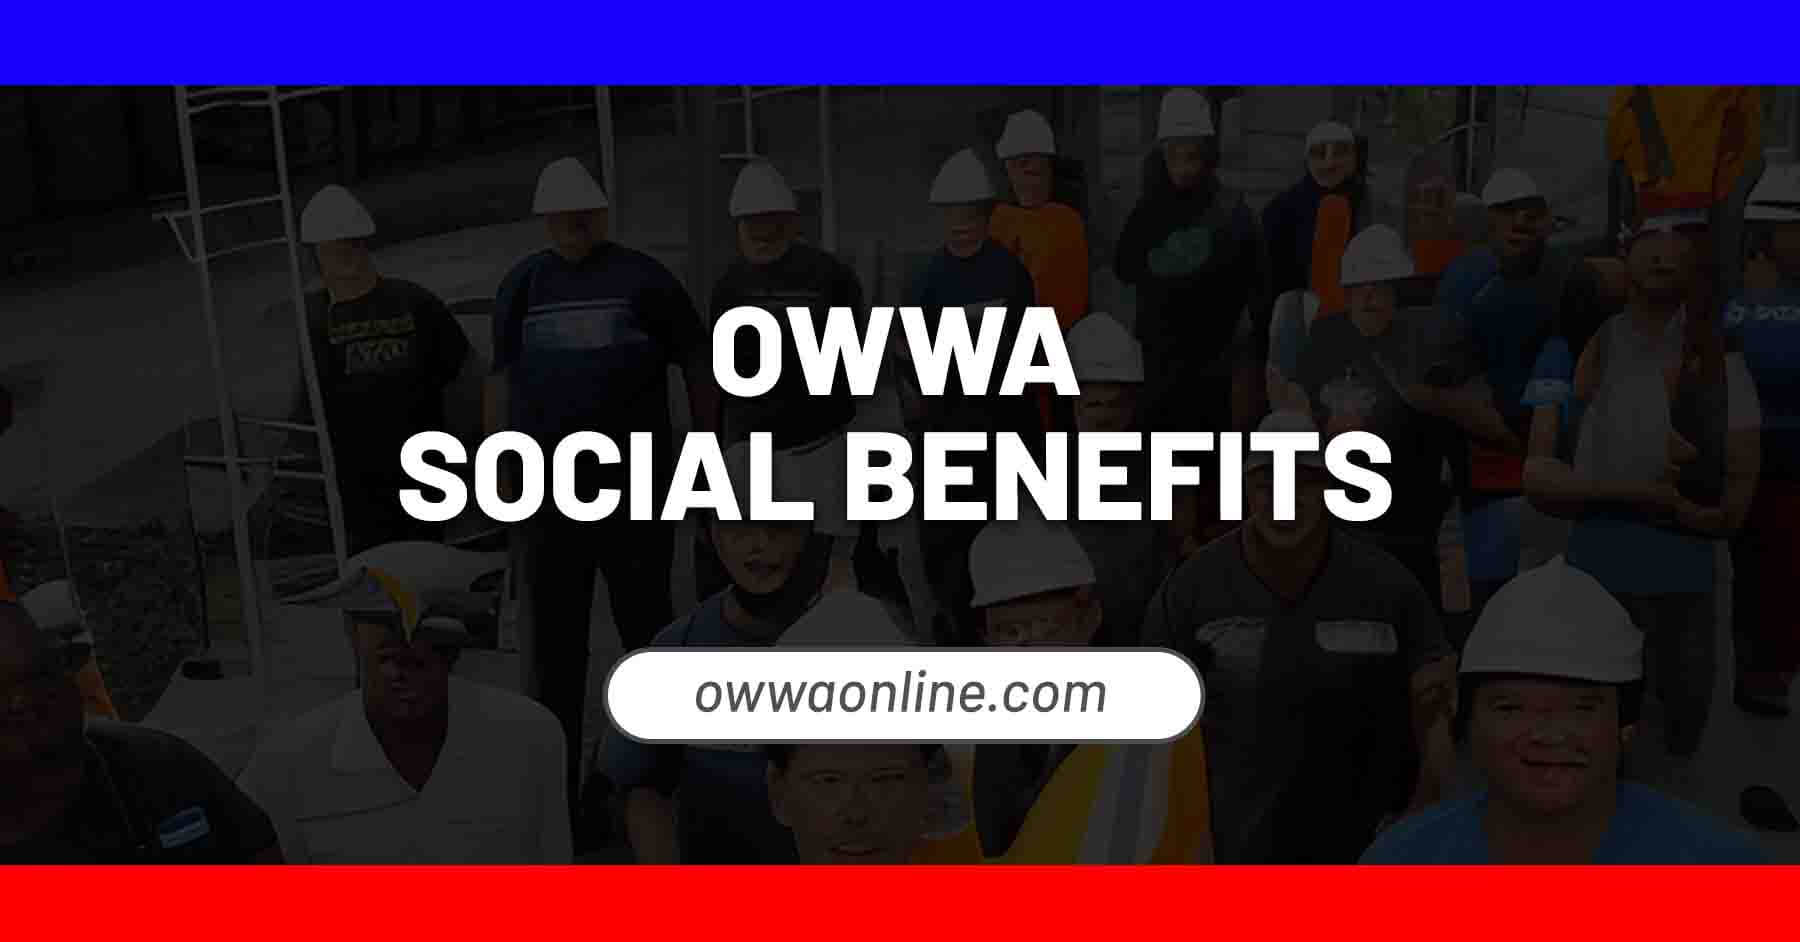 owwa social benefits for ofws